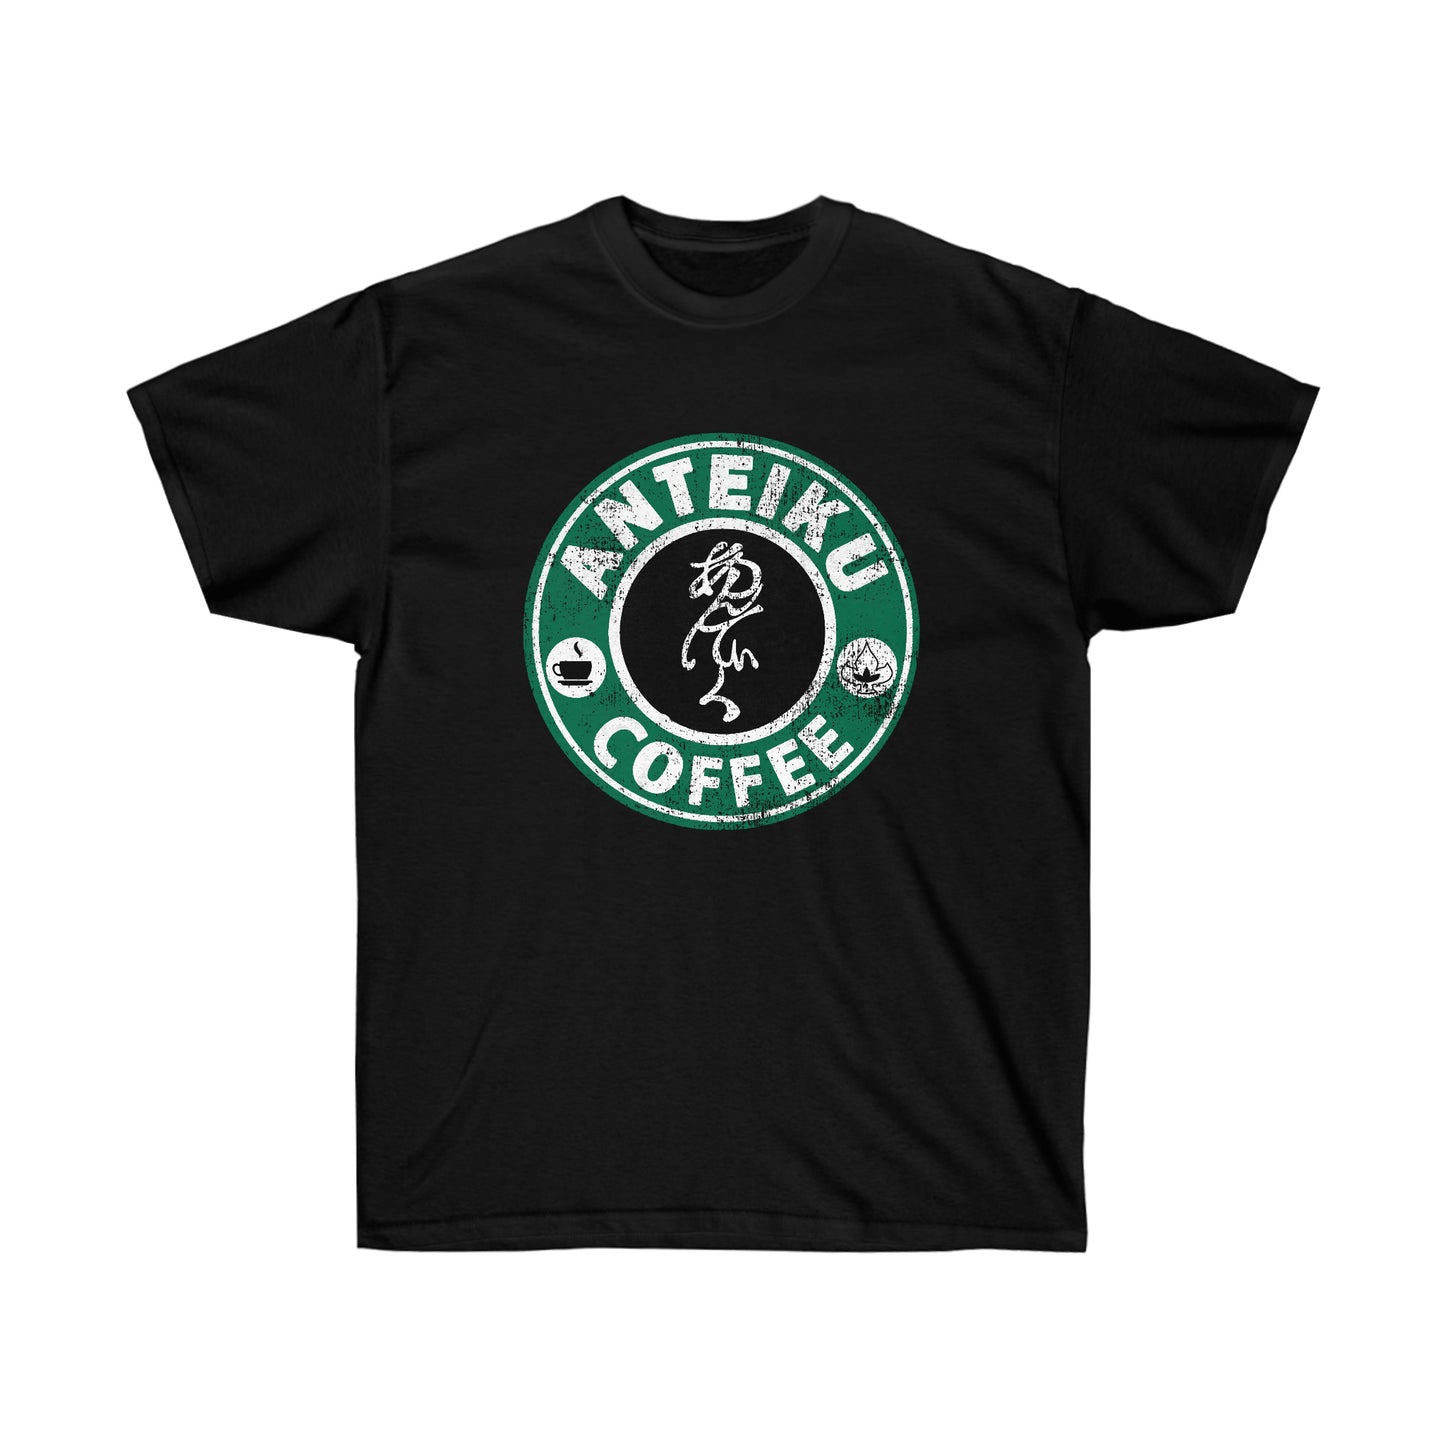 Anteiku Coffee Tokyo Goul Green Star t-Shirt Anteiku Cafe